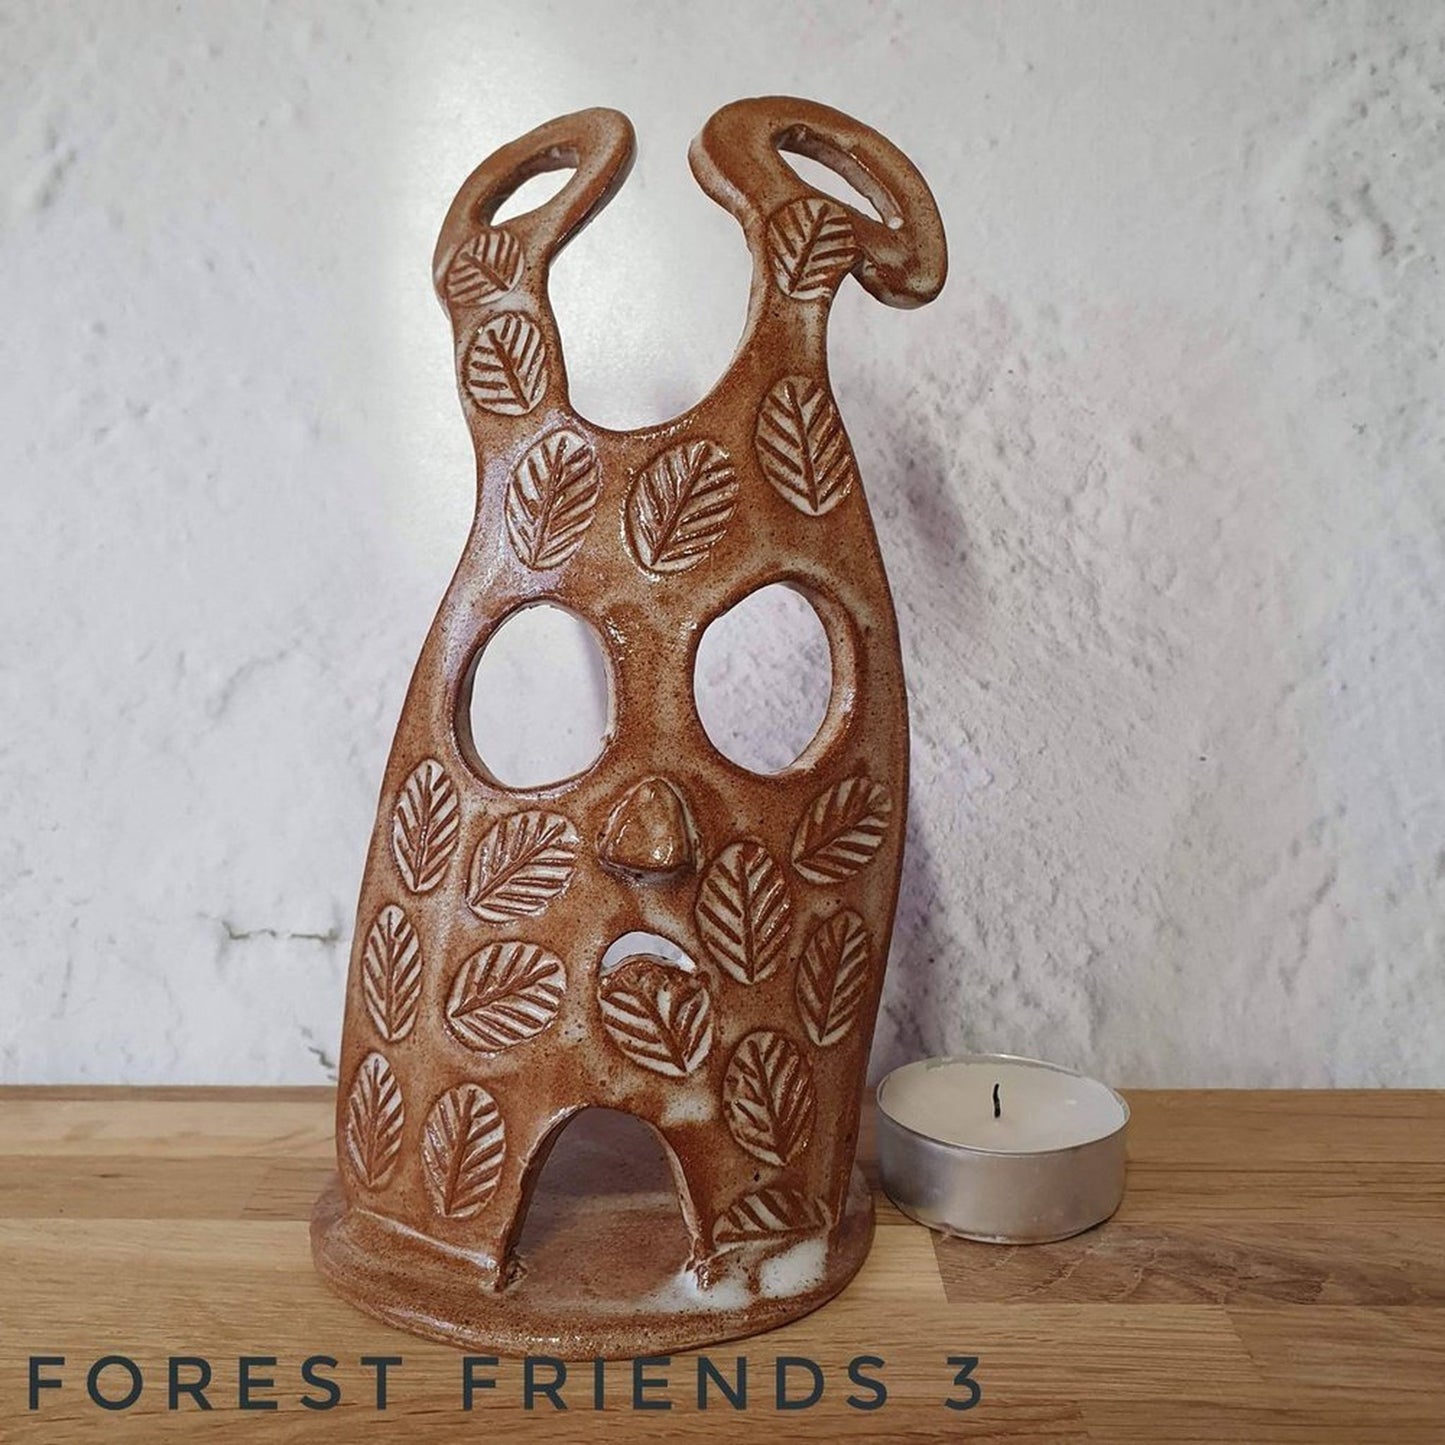 Ceramic forest creature sculpture ornament/ candle holder _image